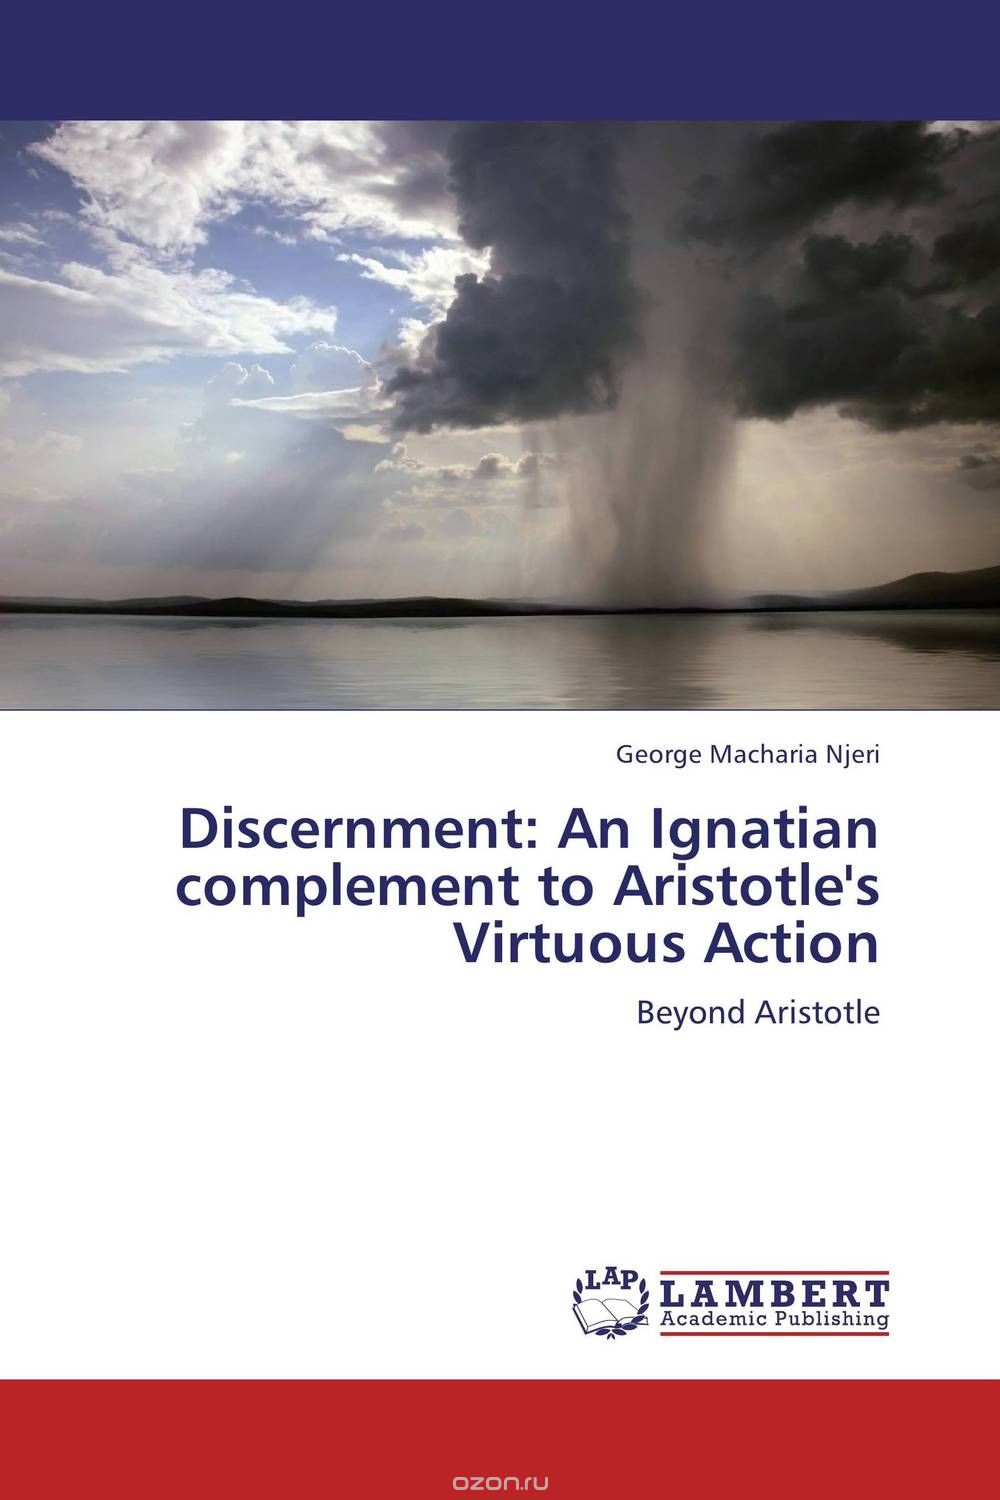 Скачать книгу "Discernment: An Ignatian complement to Aristotle's Virtuous Action"